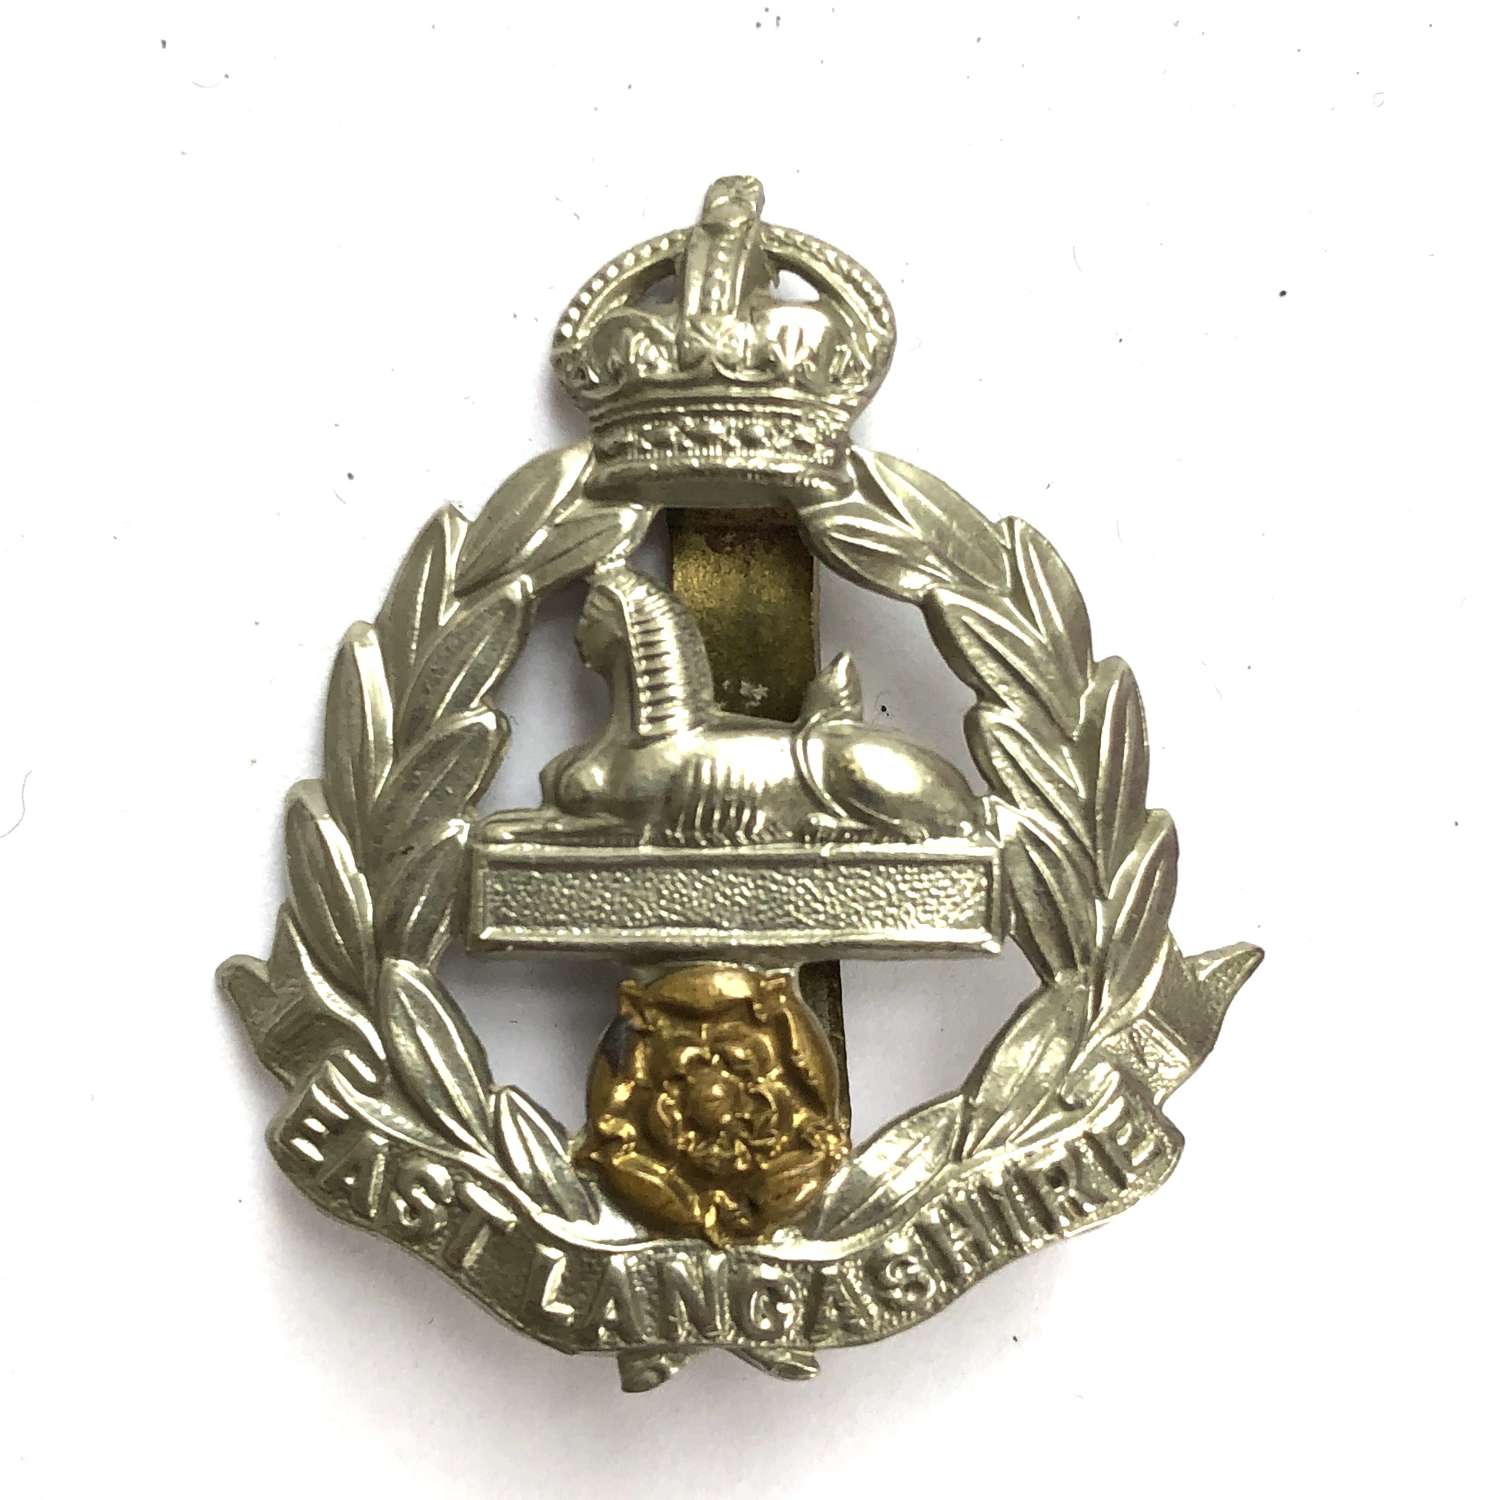 4th & 5th Bns. East Lancashire Regiment WW1 cap badge